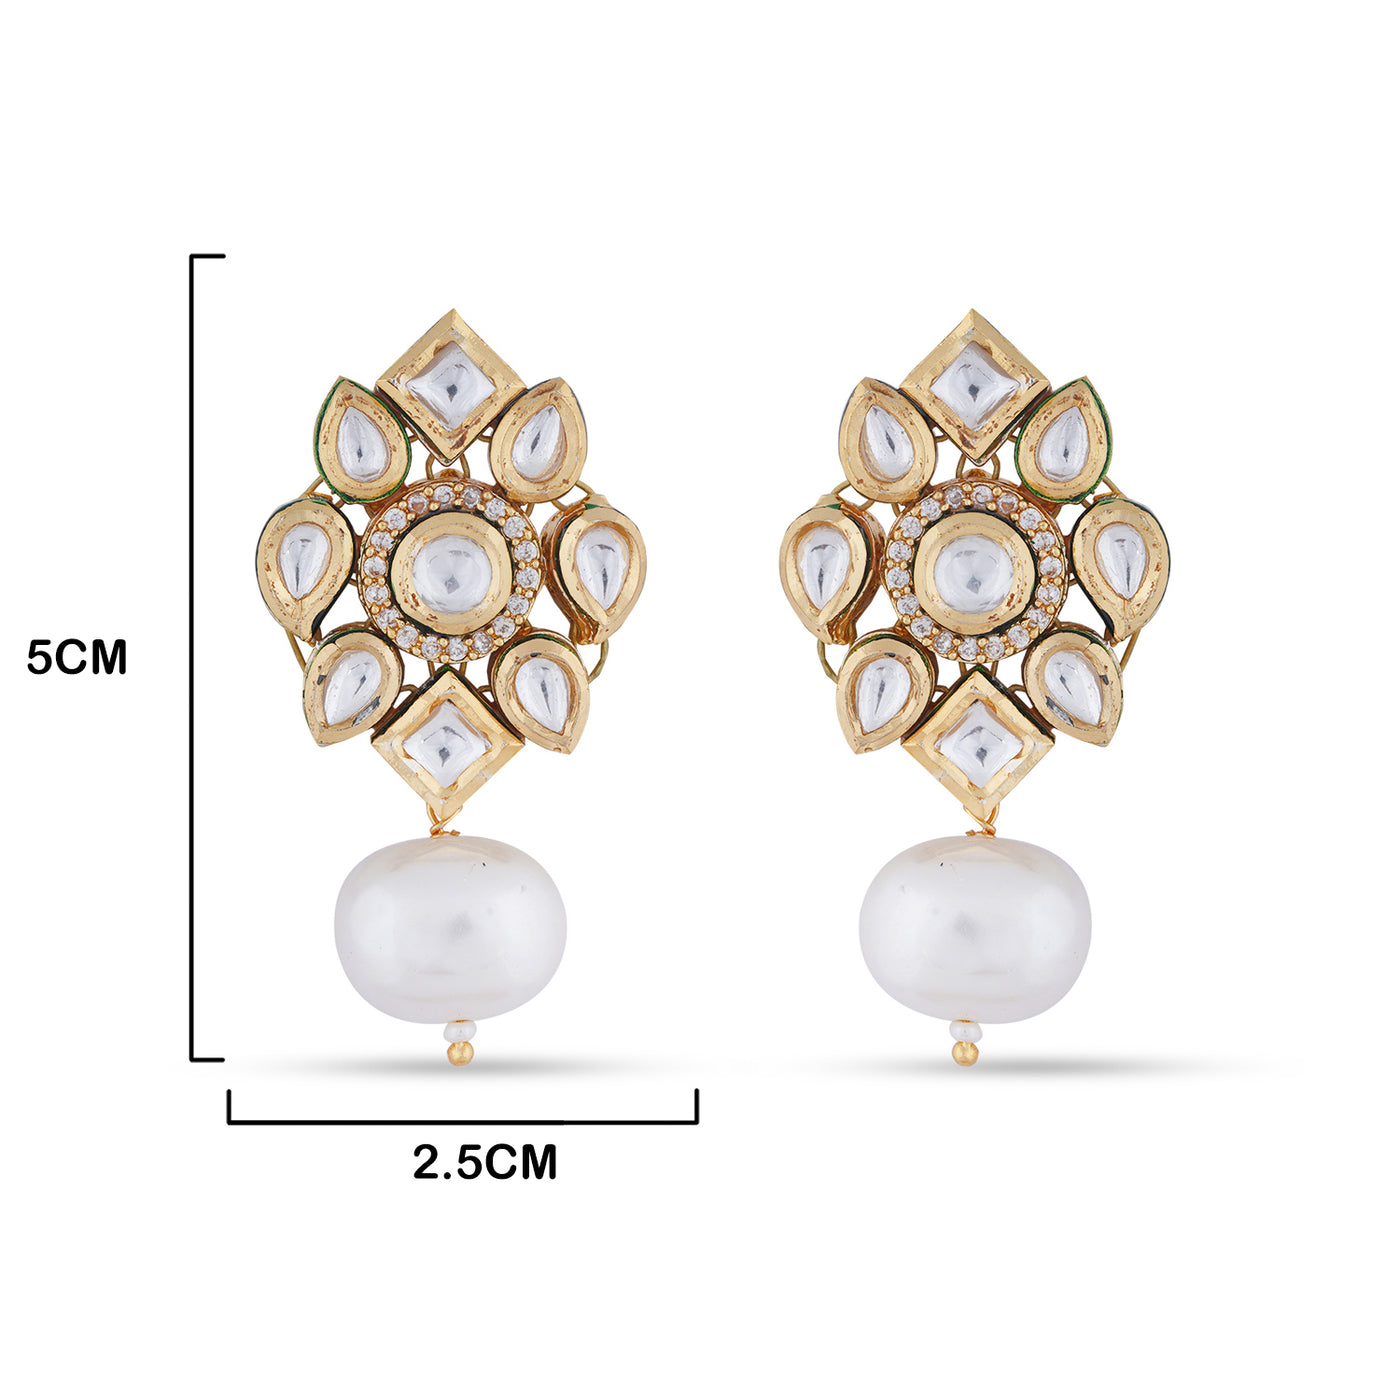 Pearl Drop Classic Kundan Earrings with measurements in cm. 5cm by 2.5cm.